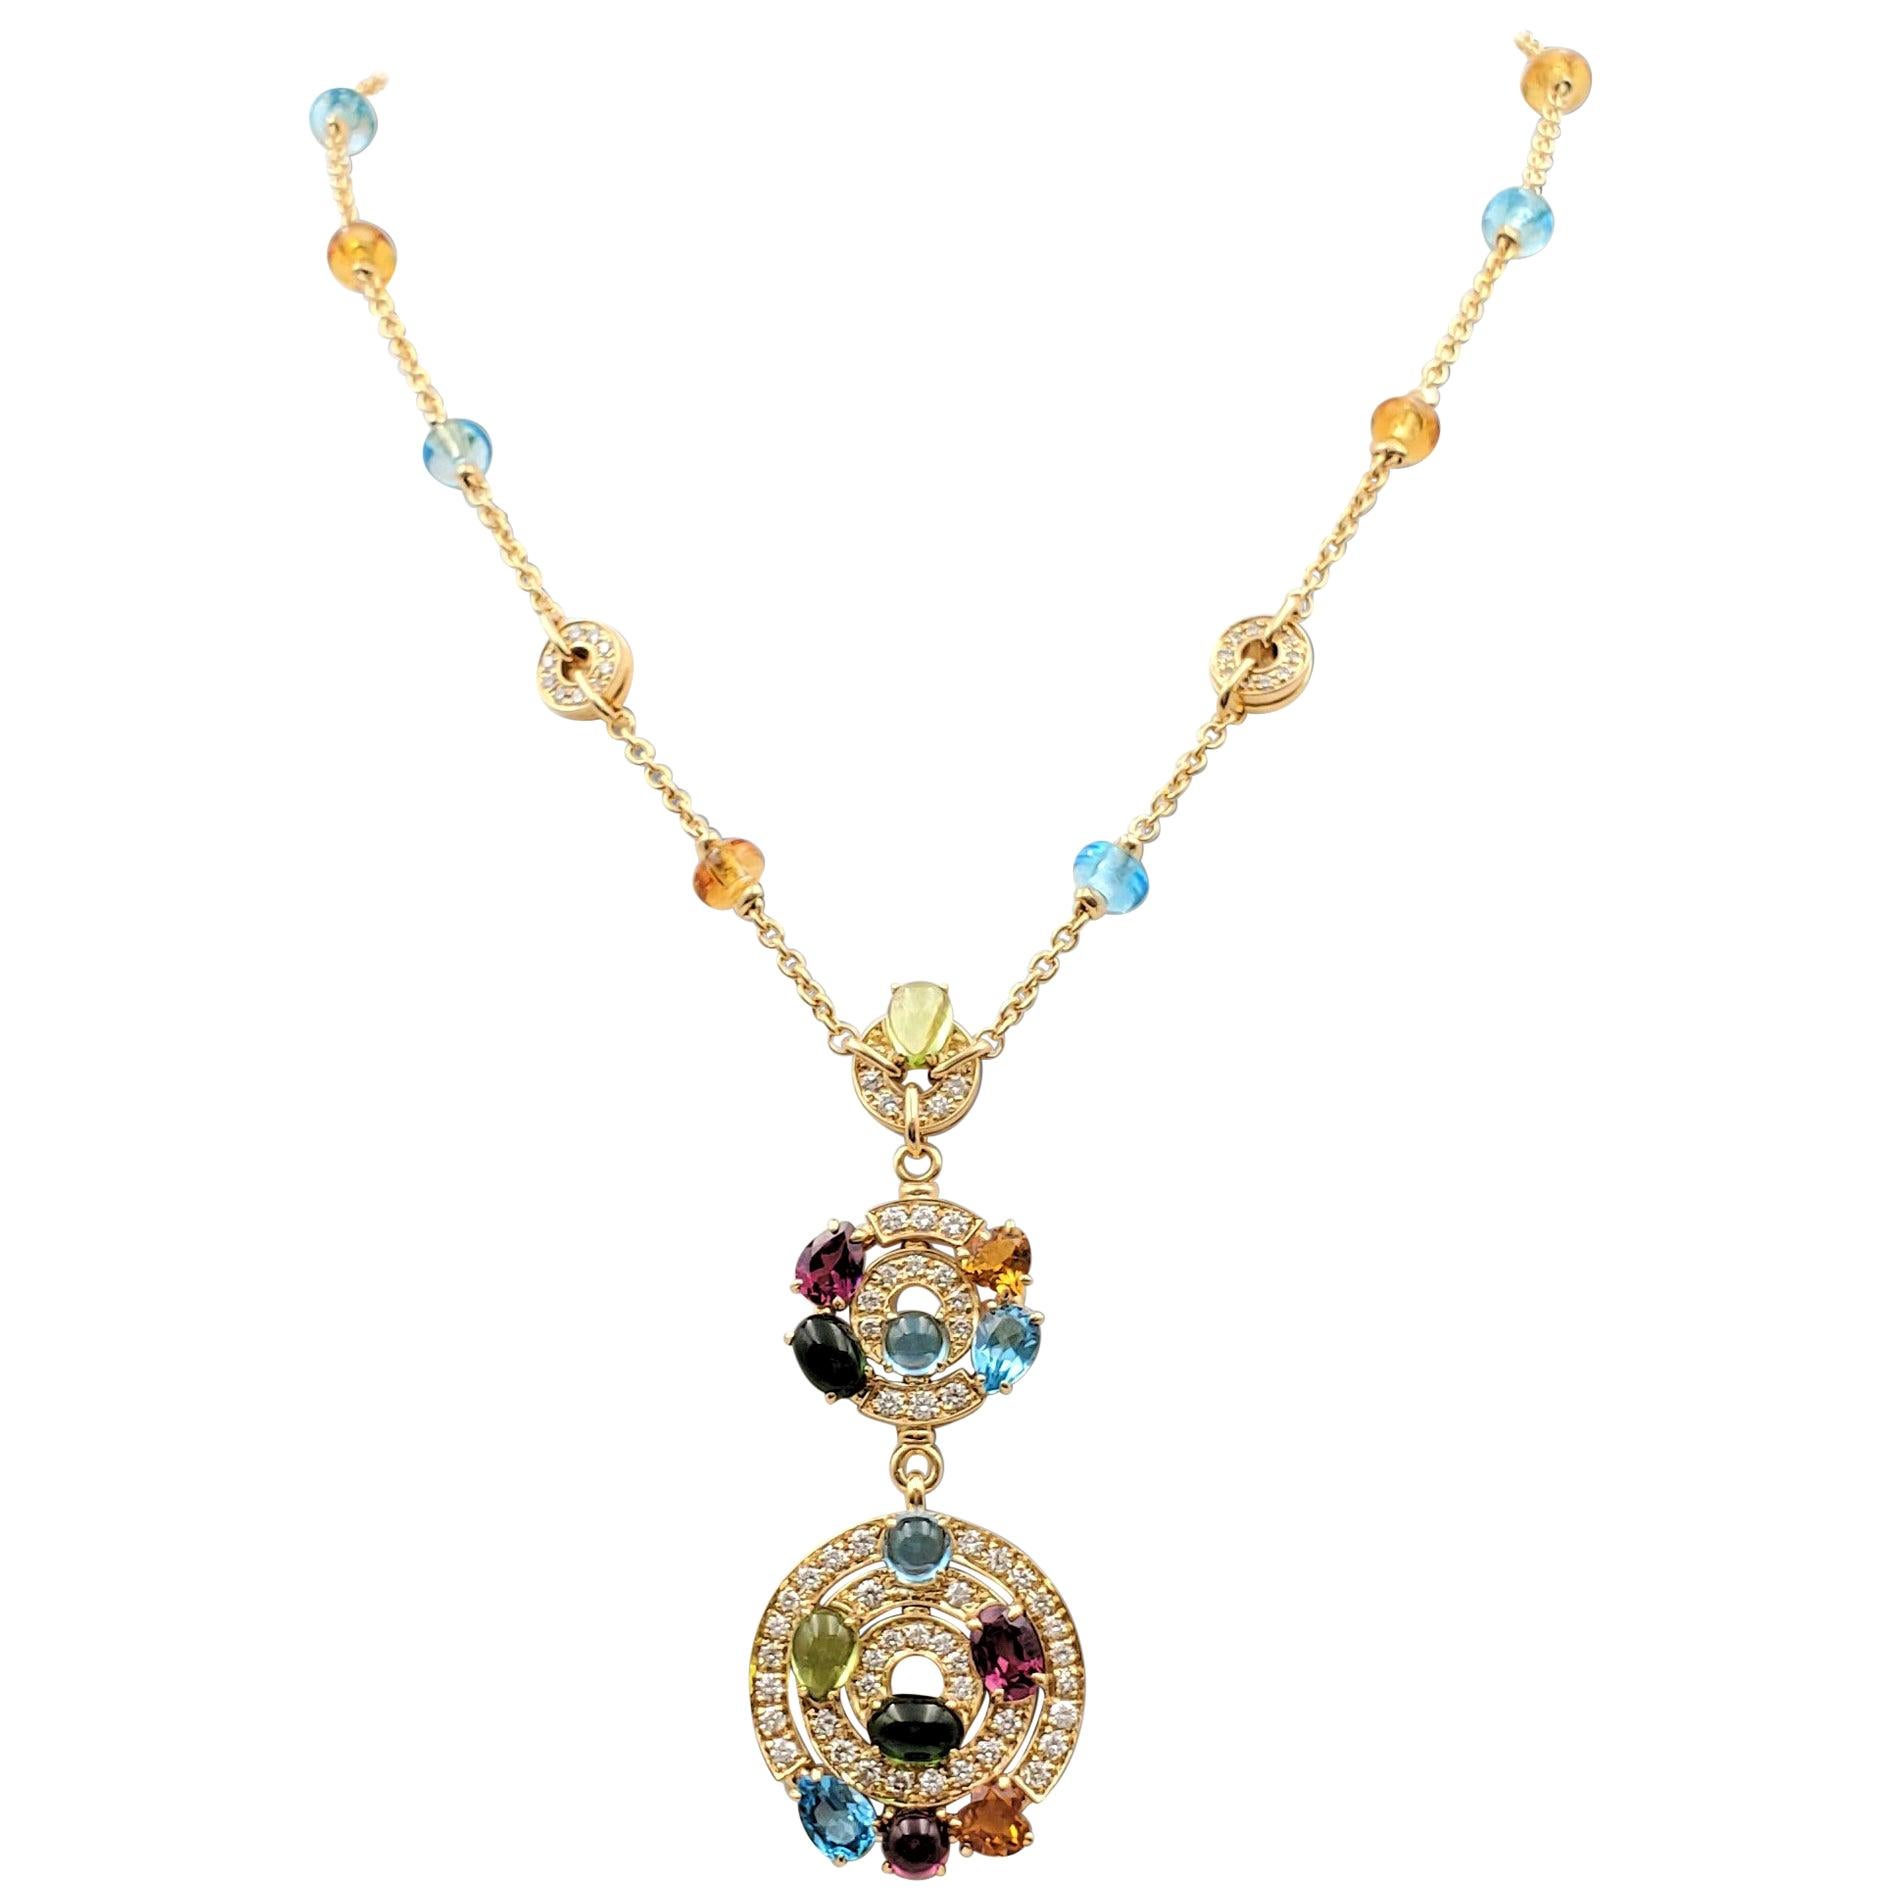 Bvlgari 'Astrale' Yellow Gold Diamond and Gemstone Pendant Necklace